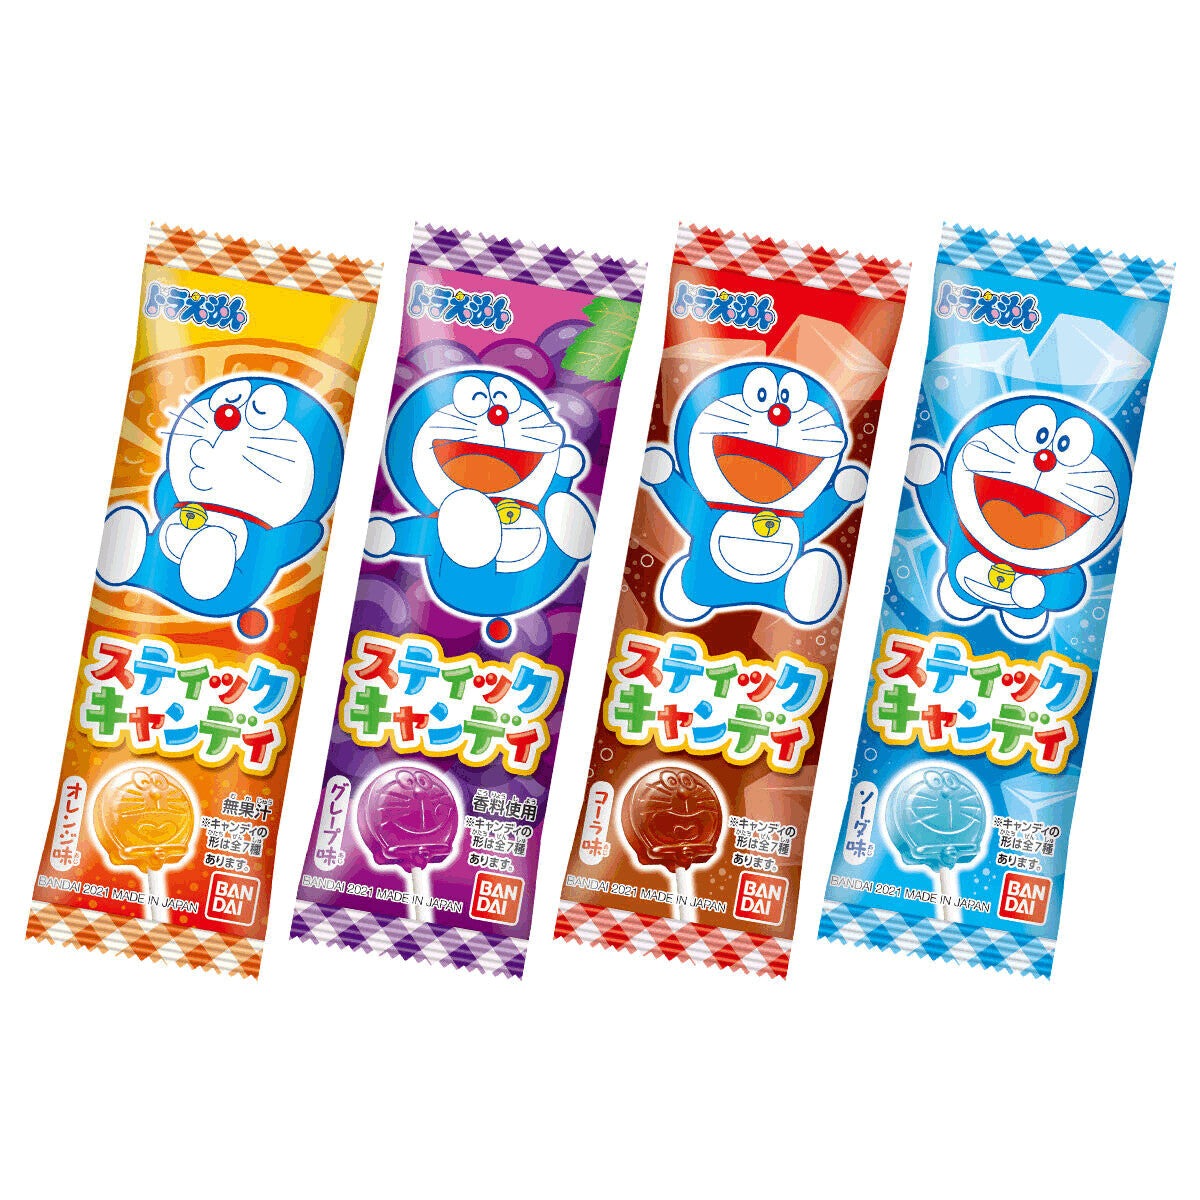 Bandai Doraemon Stick Candy, 1 box (25 pcs)